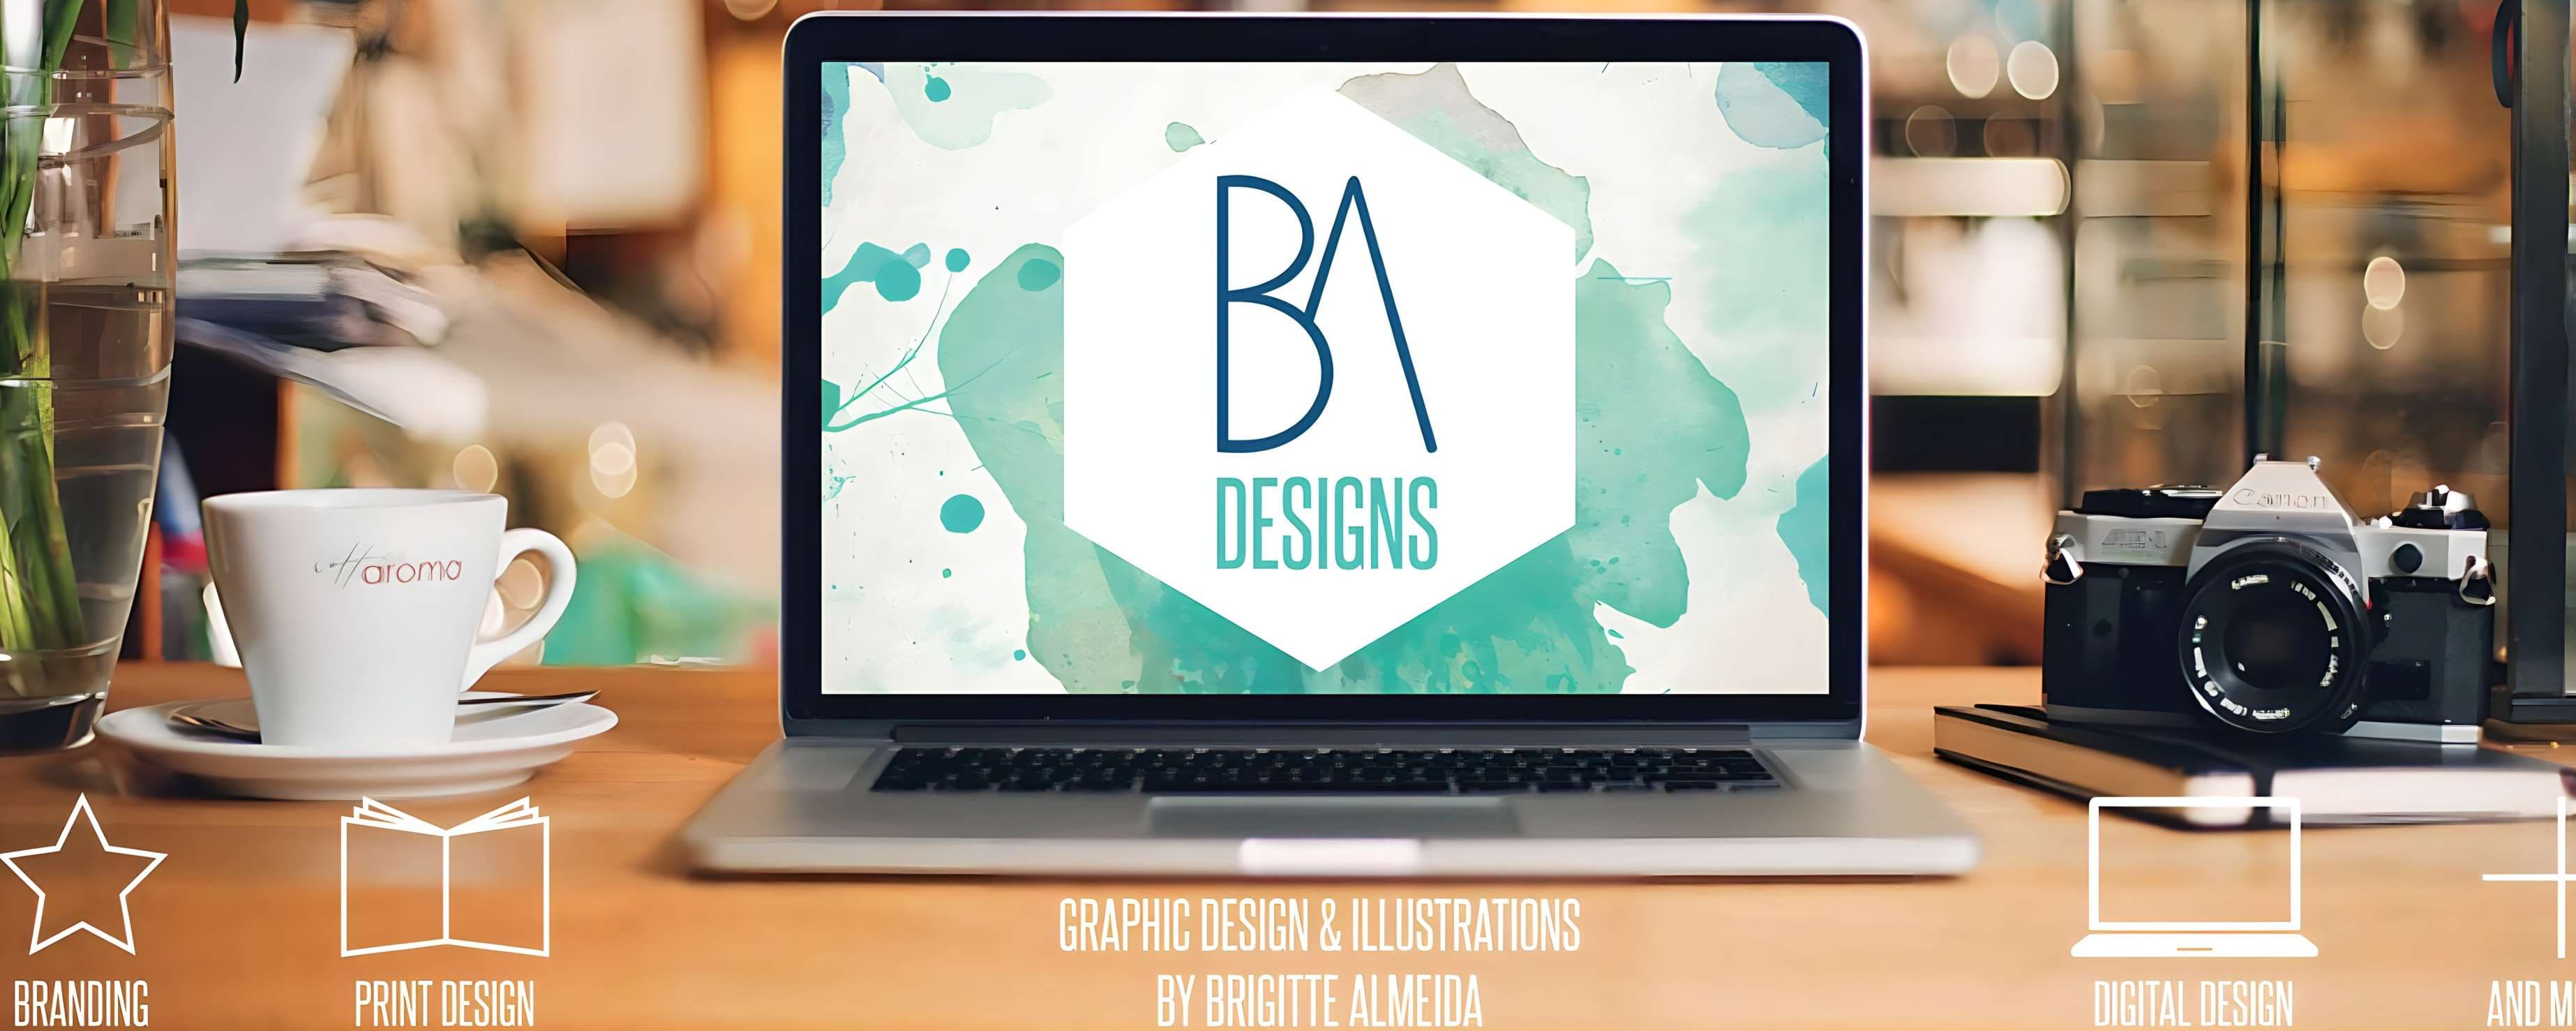 B.A Designs